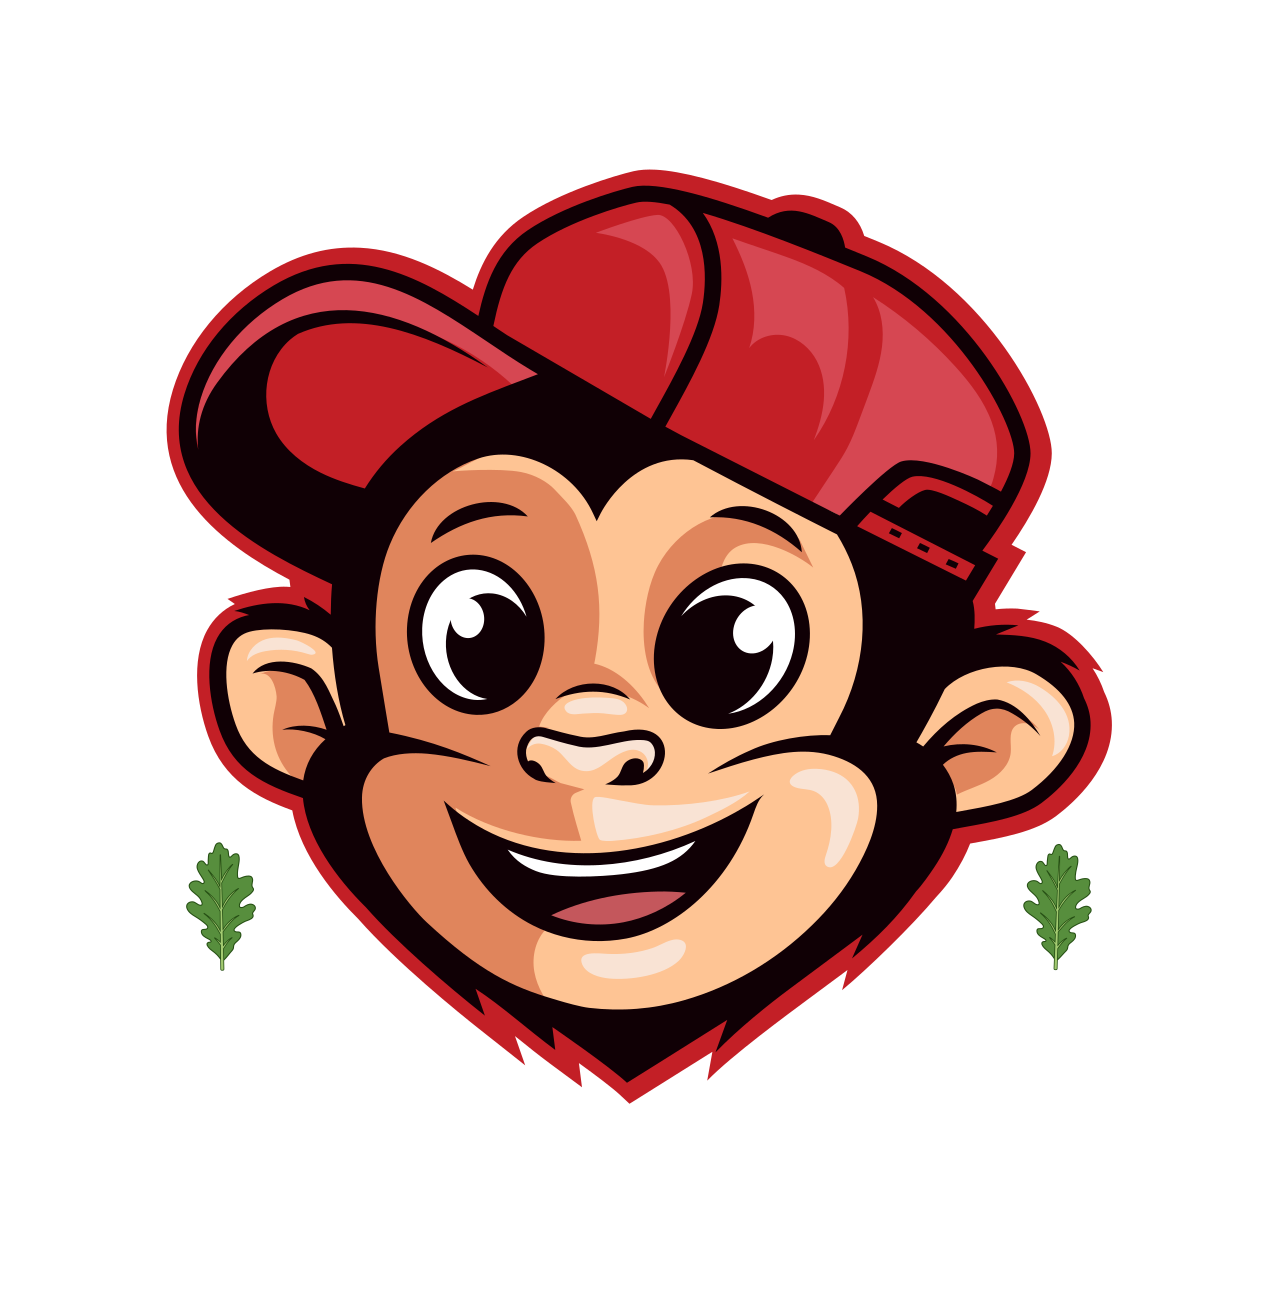 JUNGLE THREADS's logo